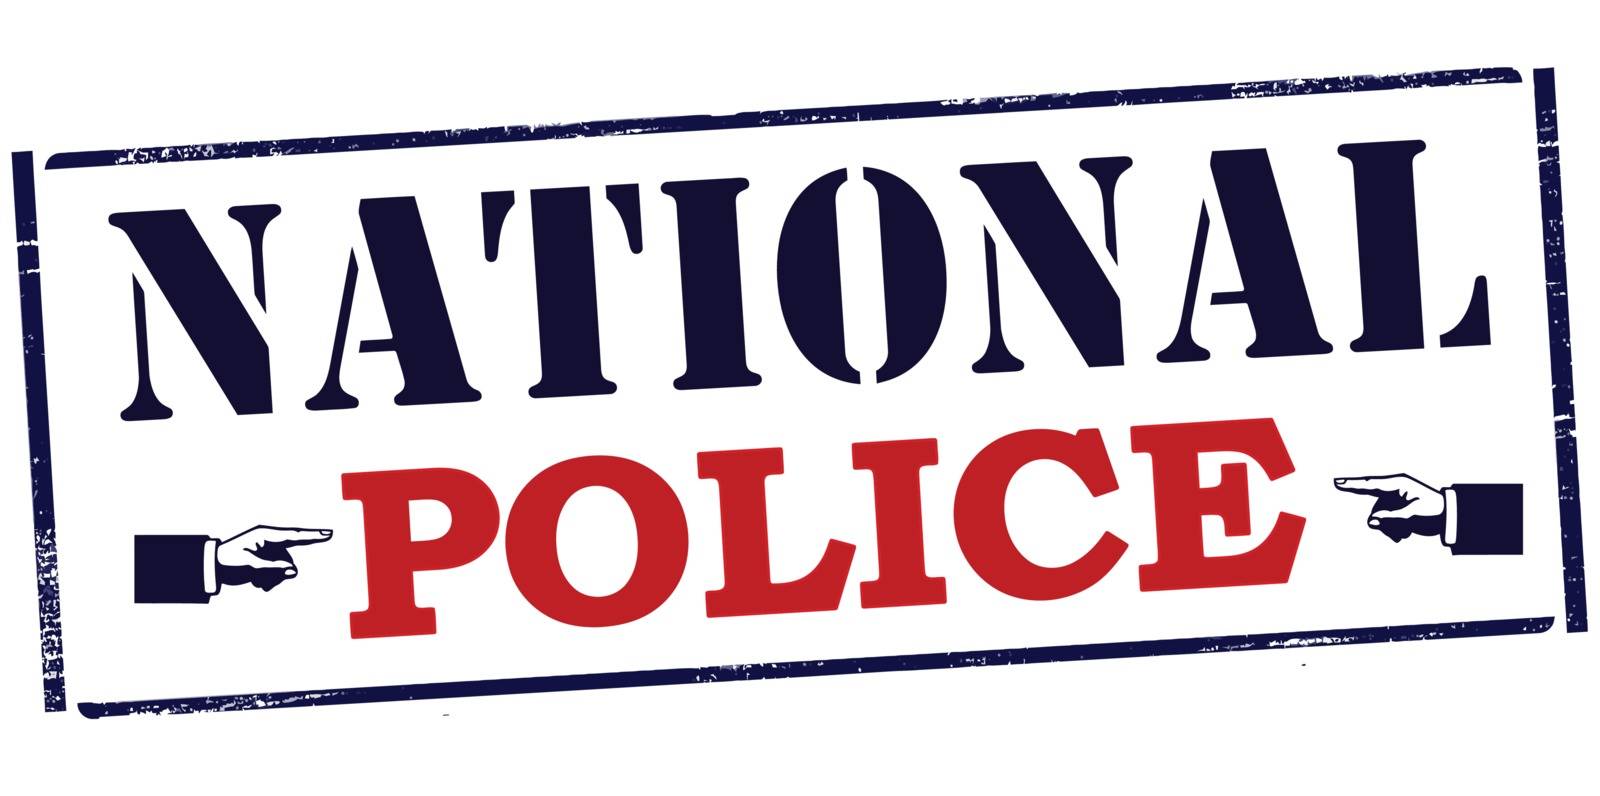 National police by carmenbobo